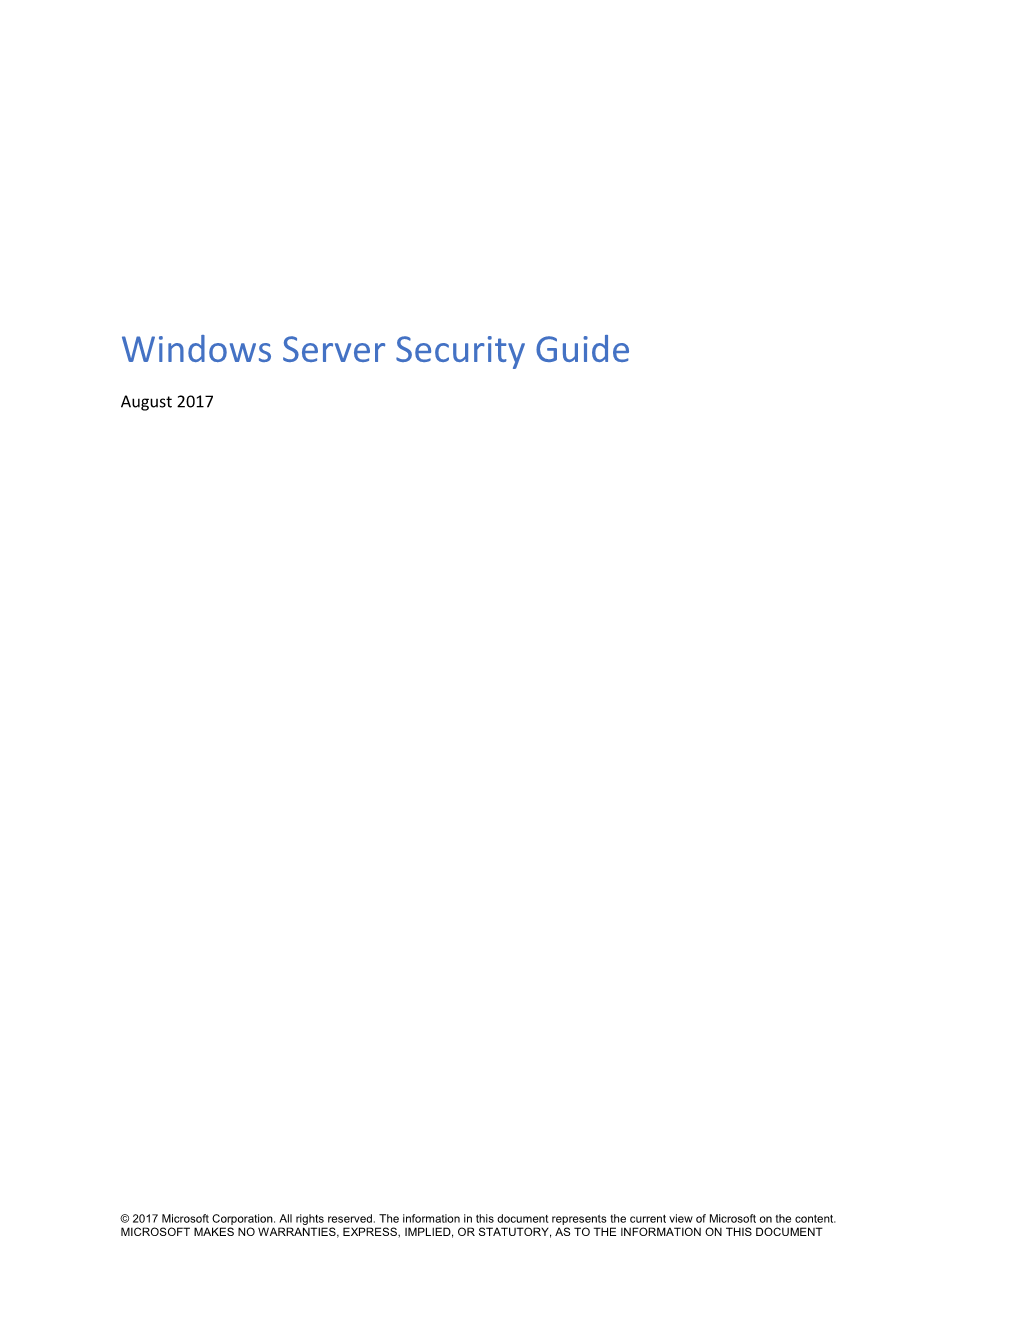 Windows Server 2016 Security Guide